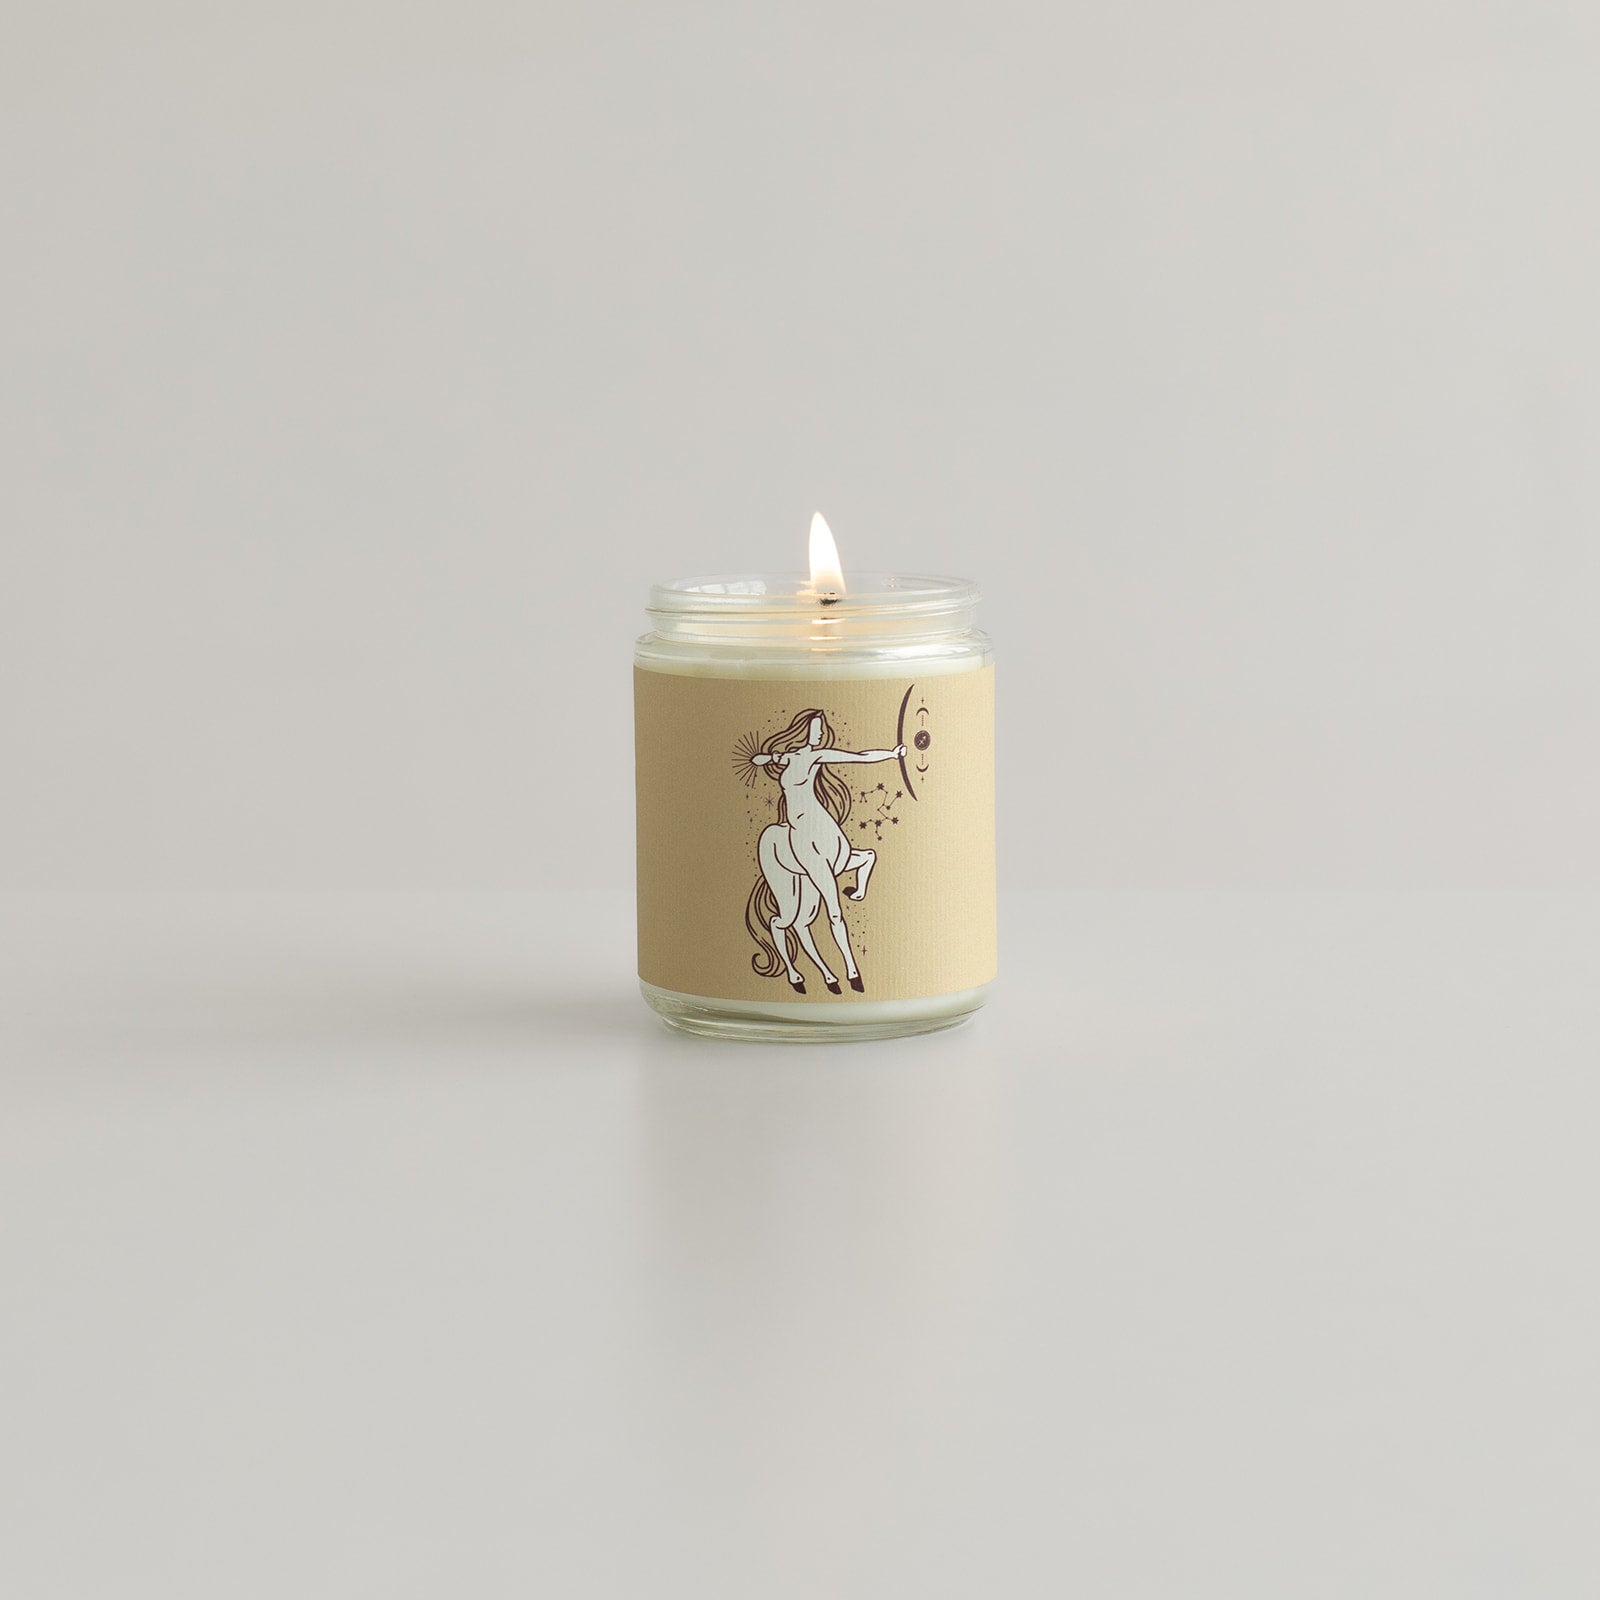 sagittarius zodiac sign the archer woman on a glass soy wax candle jar